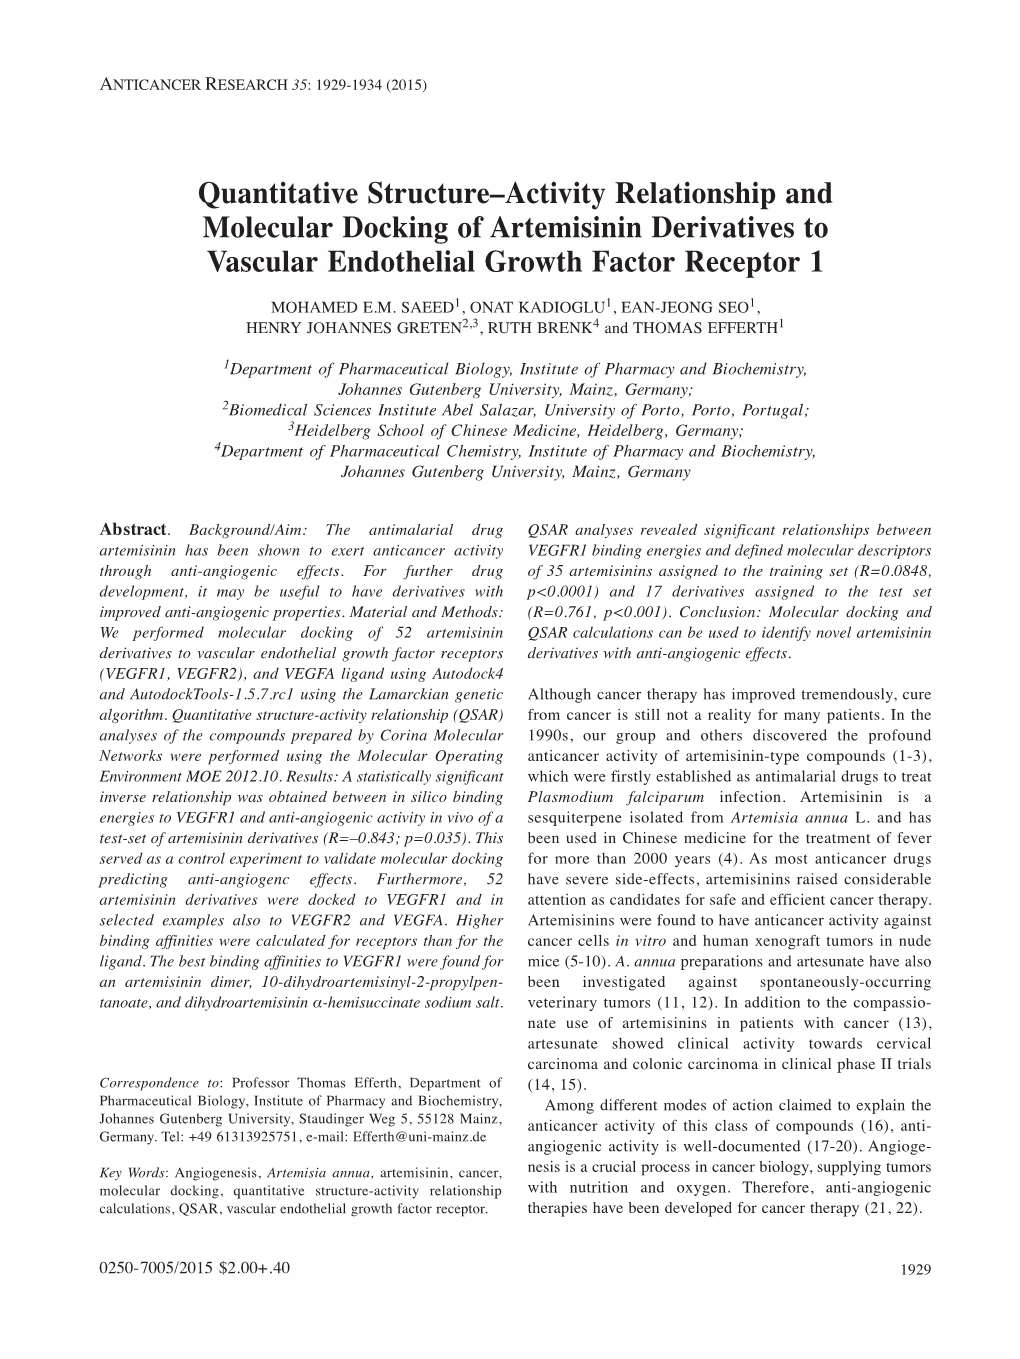 Quantitative Structure–Activity Relationship and Molecular Docking of Artemisinin Derivatives to Vascular Endothelial Growth Factor Receptor 1